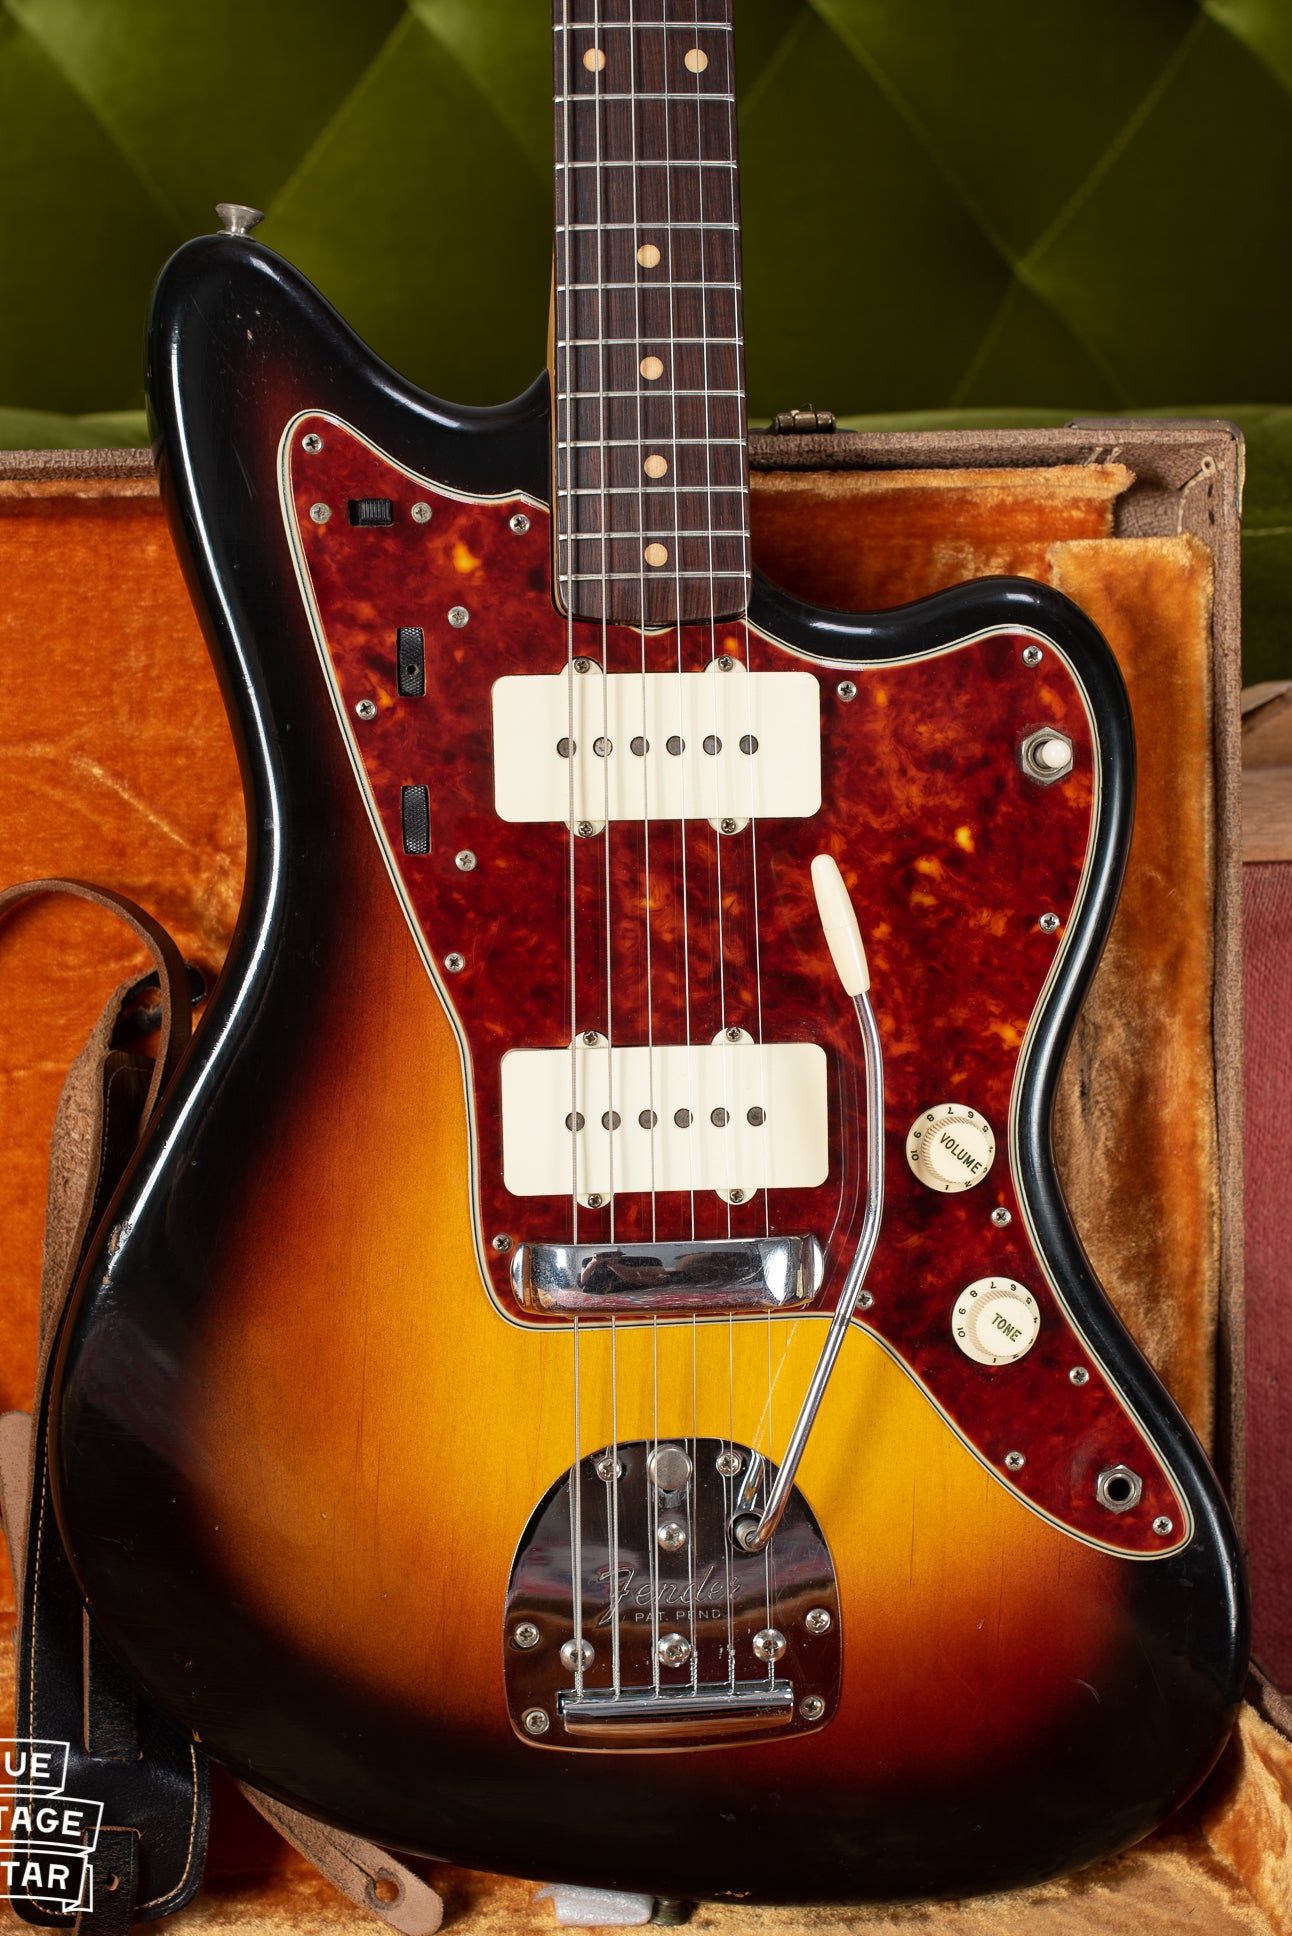 1960 Fender Jazzmaster guitar